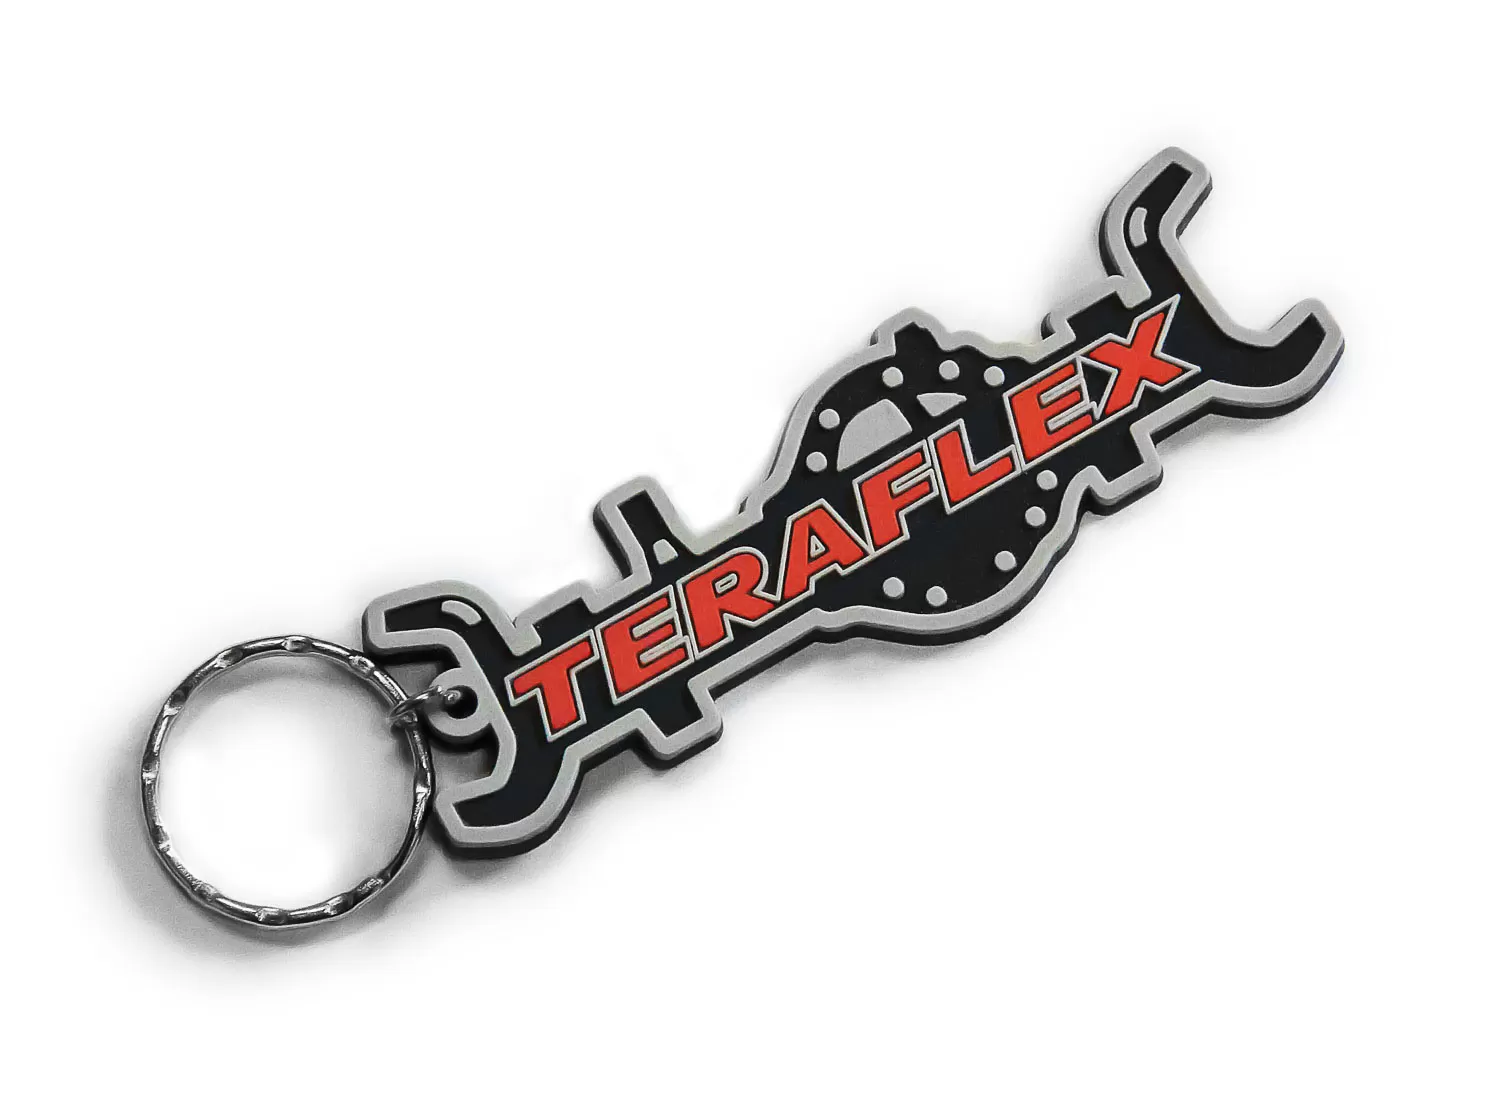 TeraFlex Axle Keychain 3.5 Inch long - 5000845